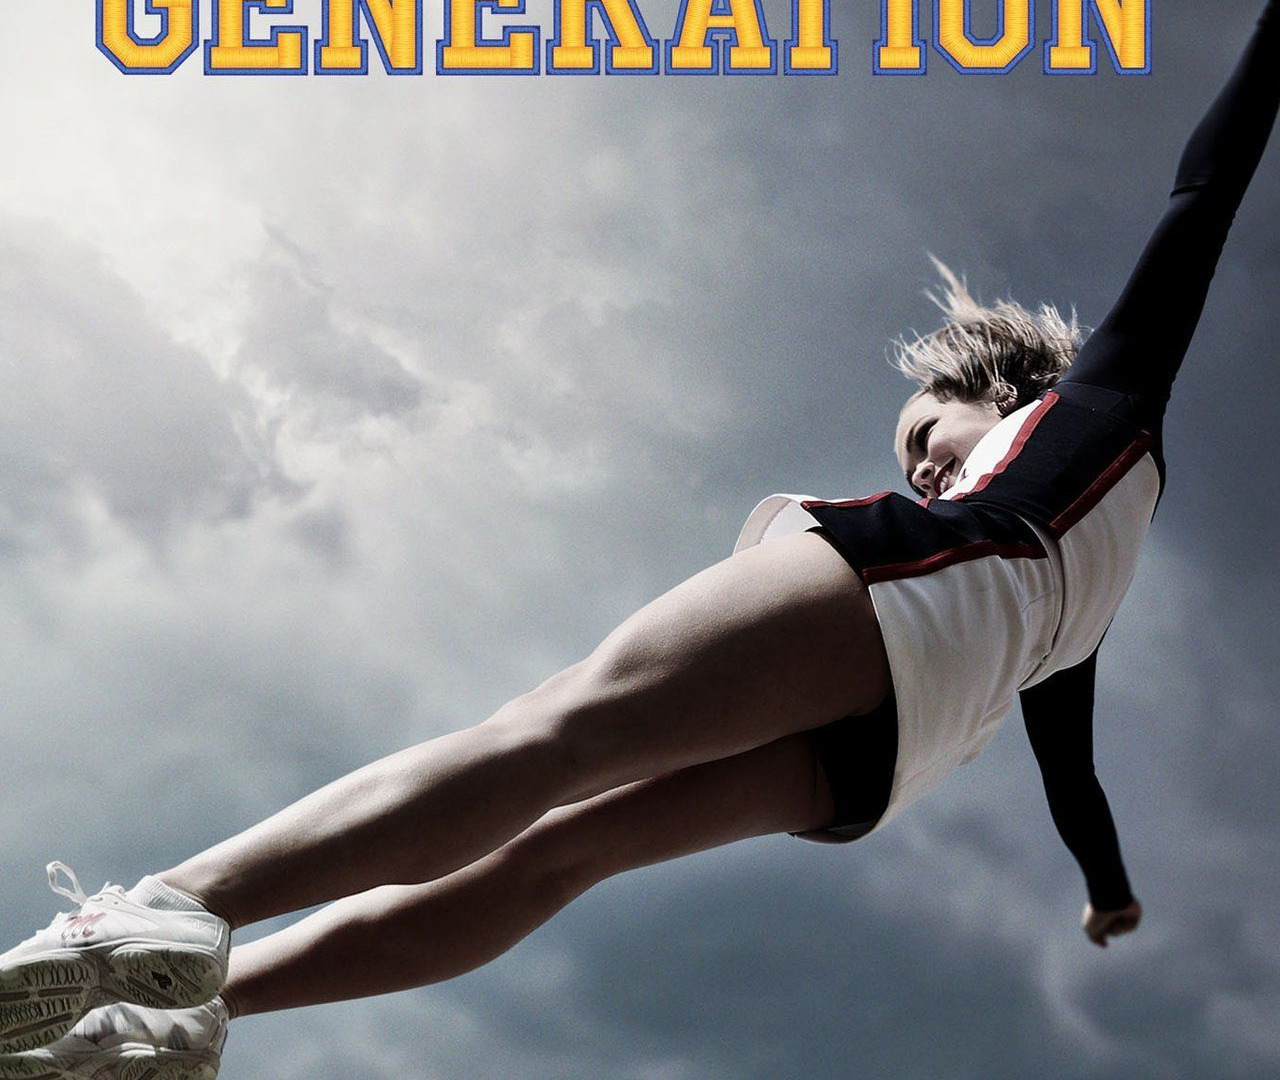 Show Cheerleader Generation